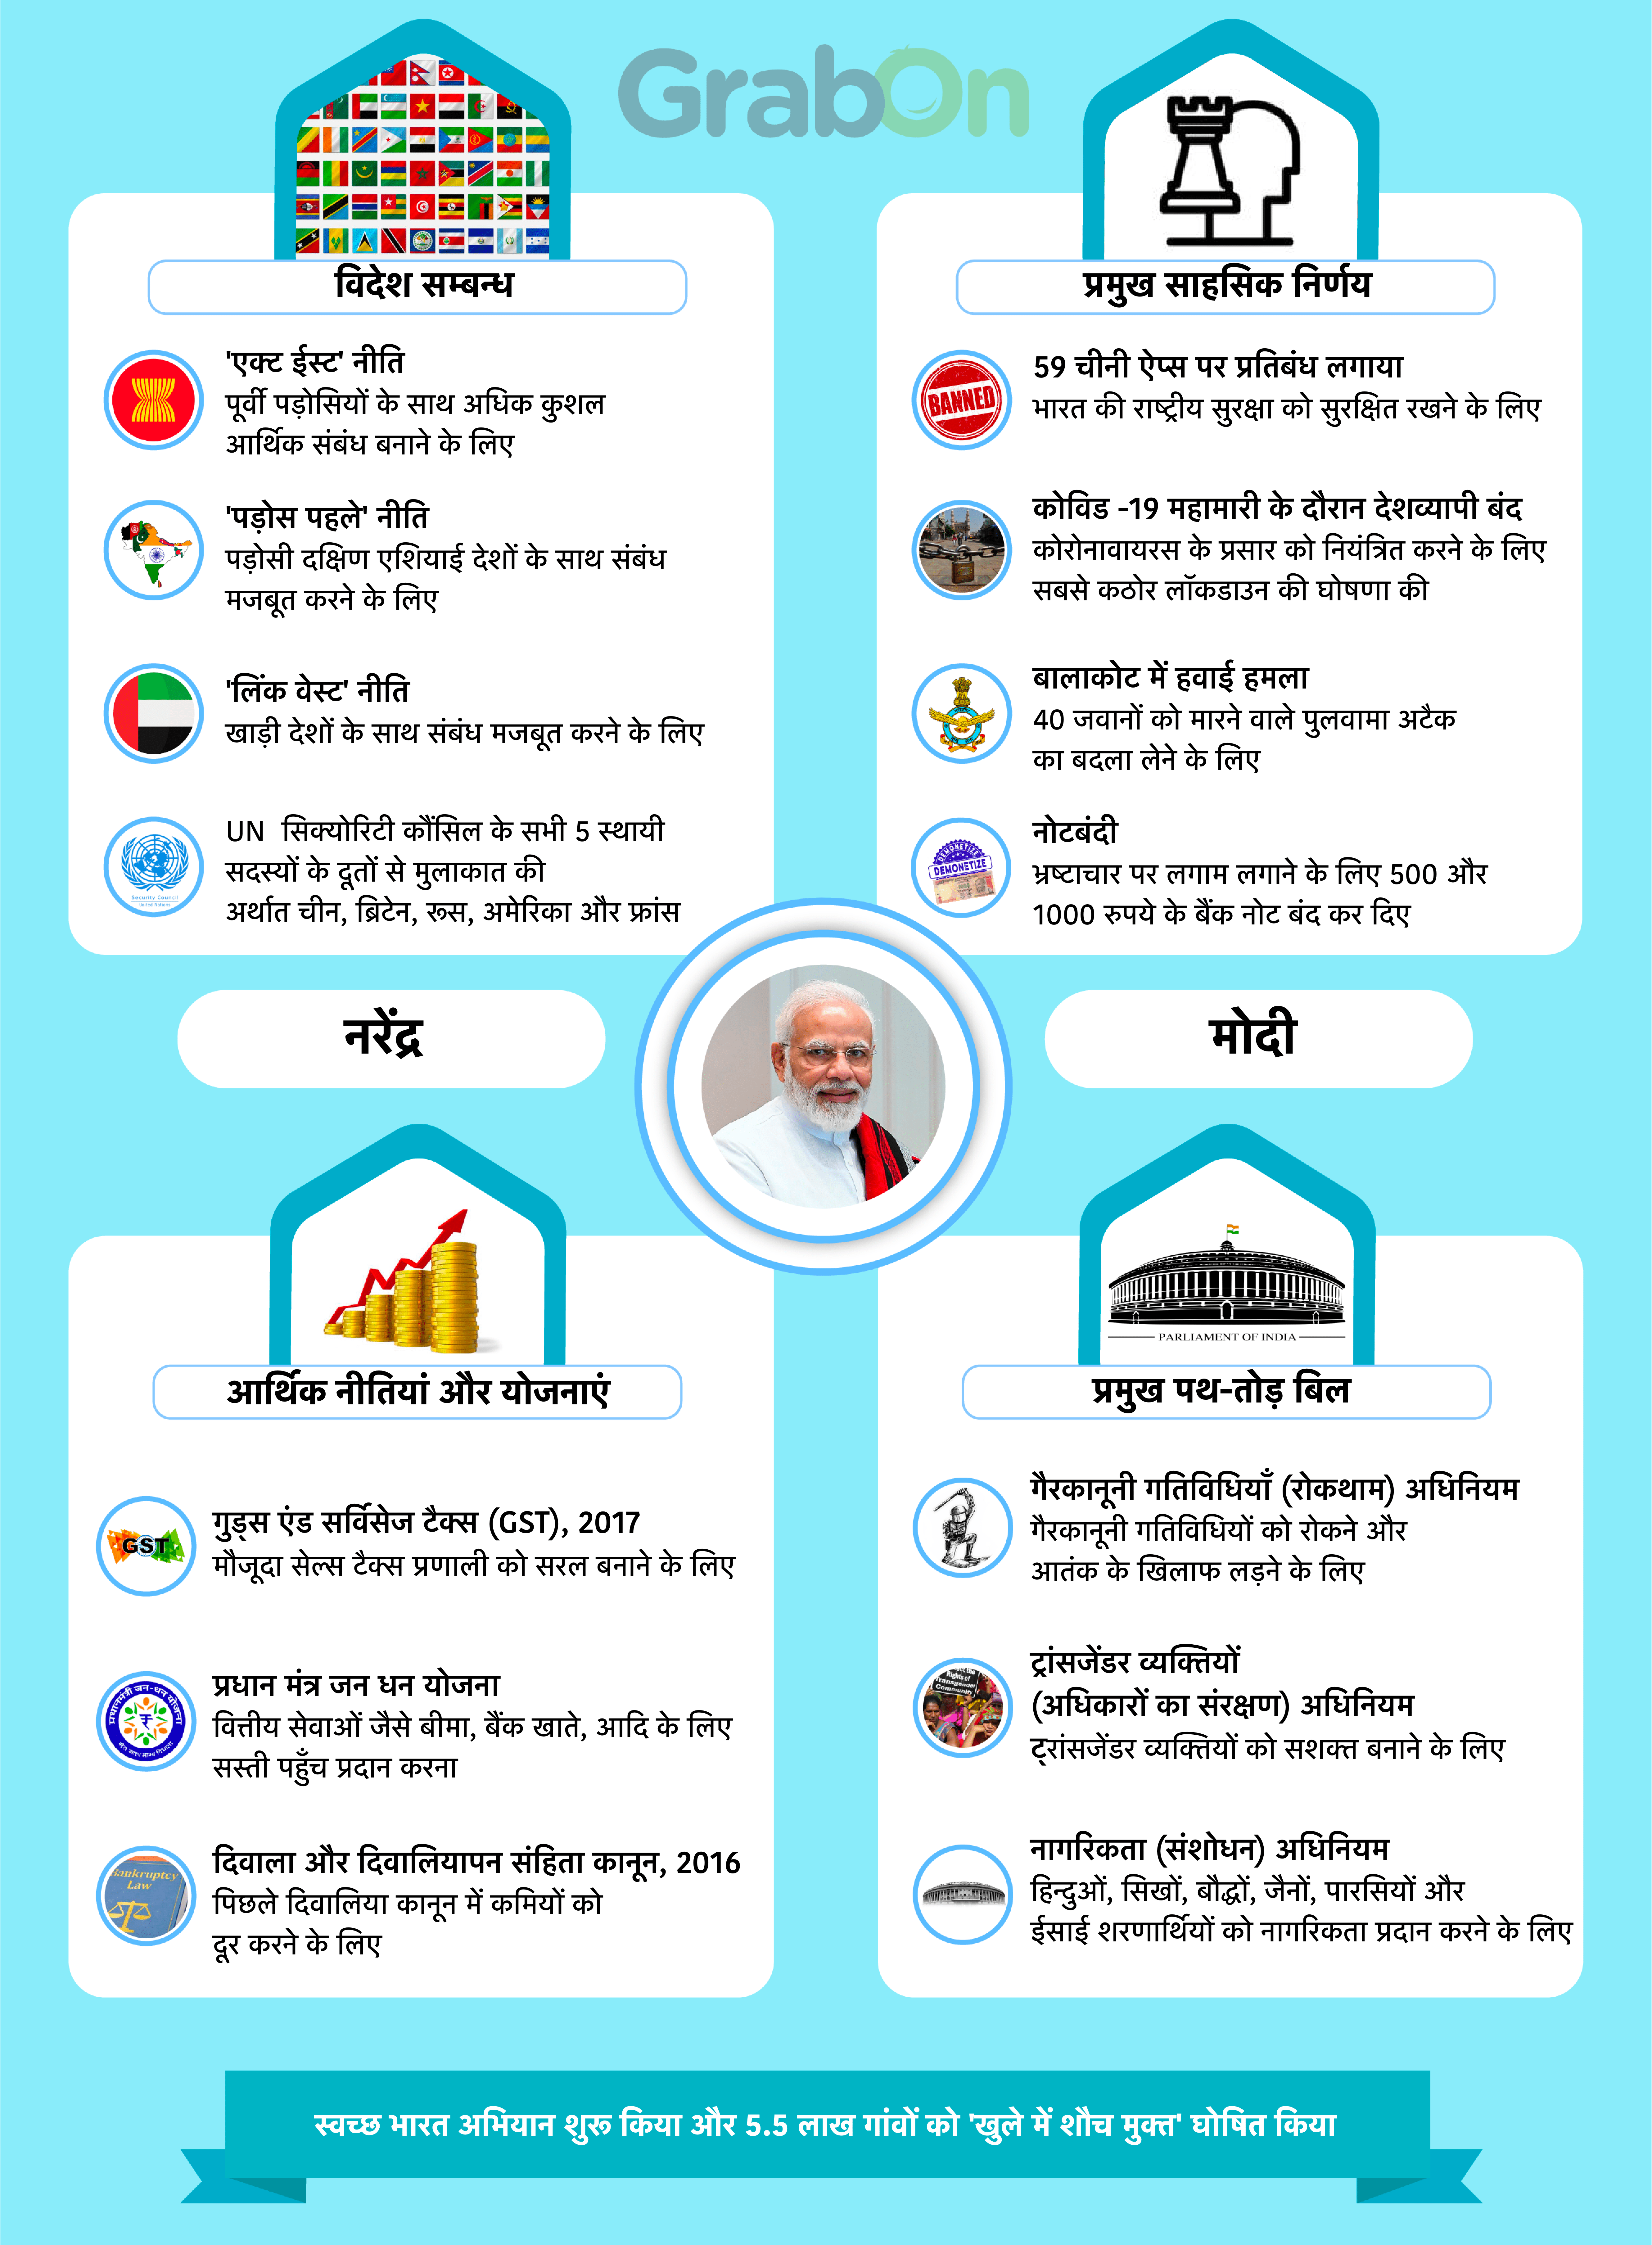 Indian PM Narendra Modi